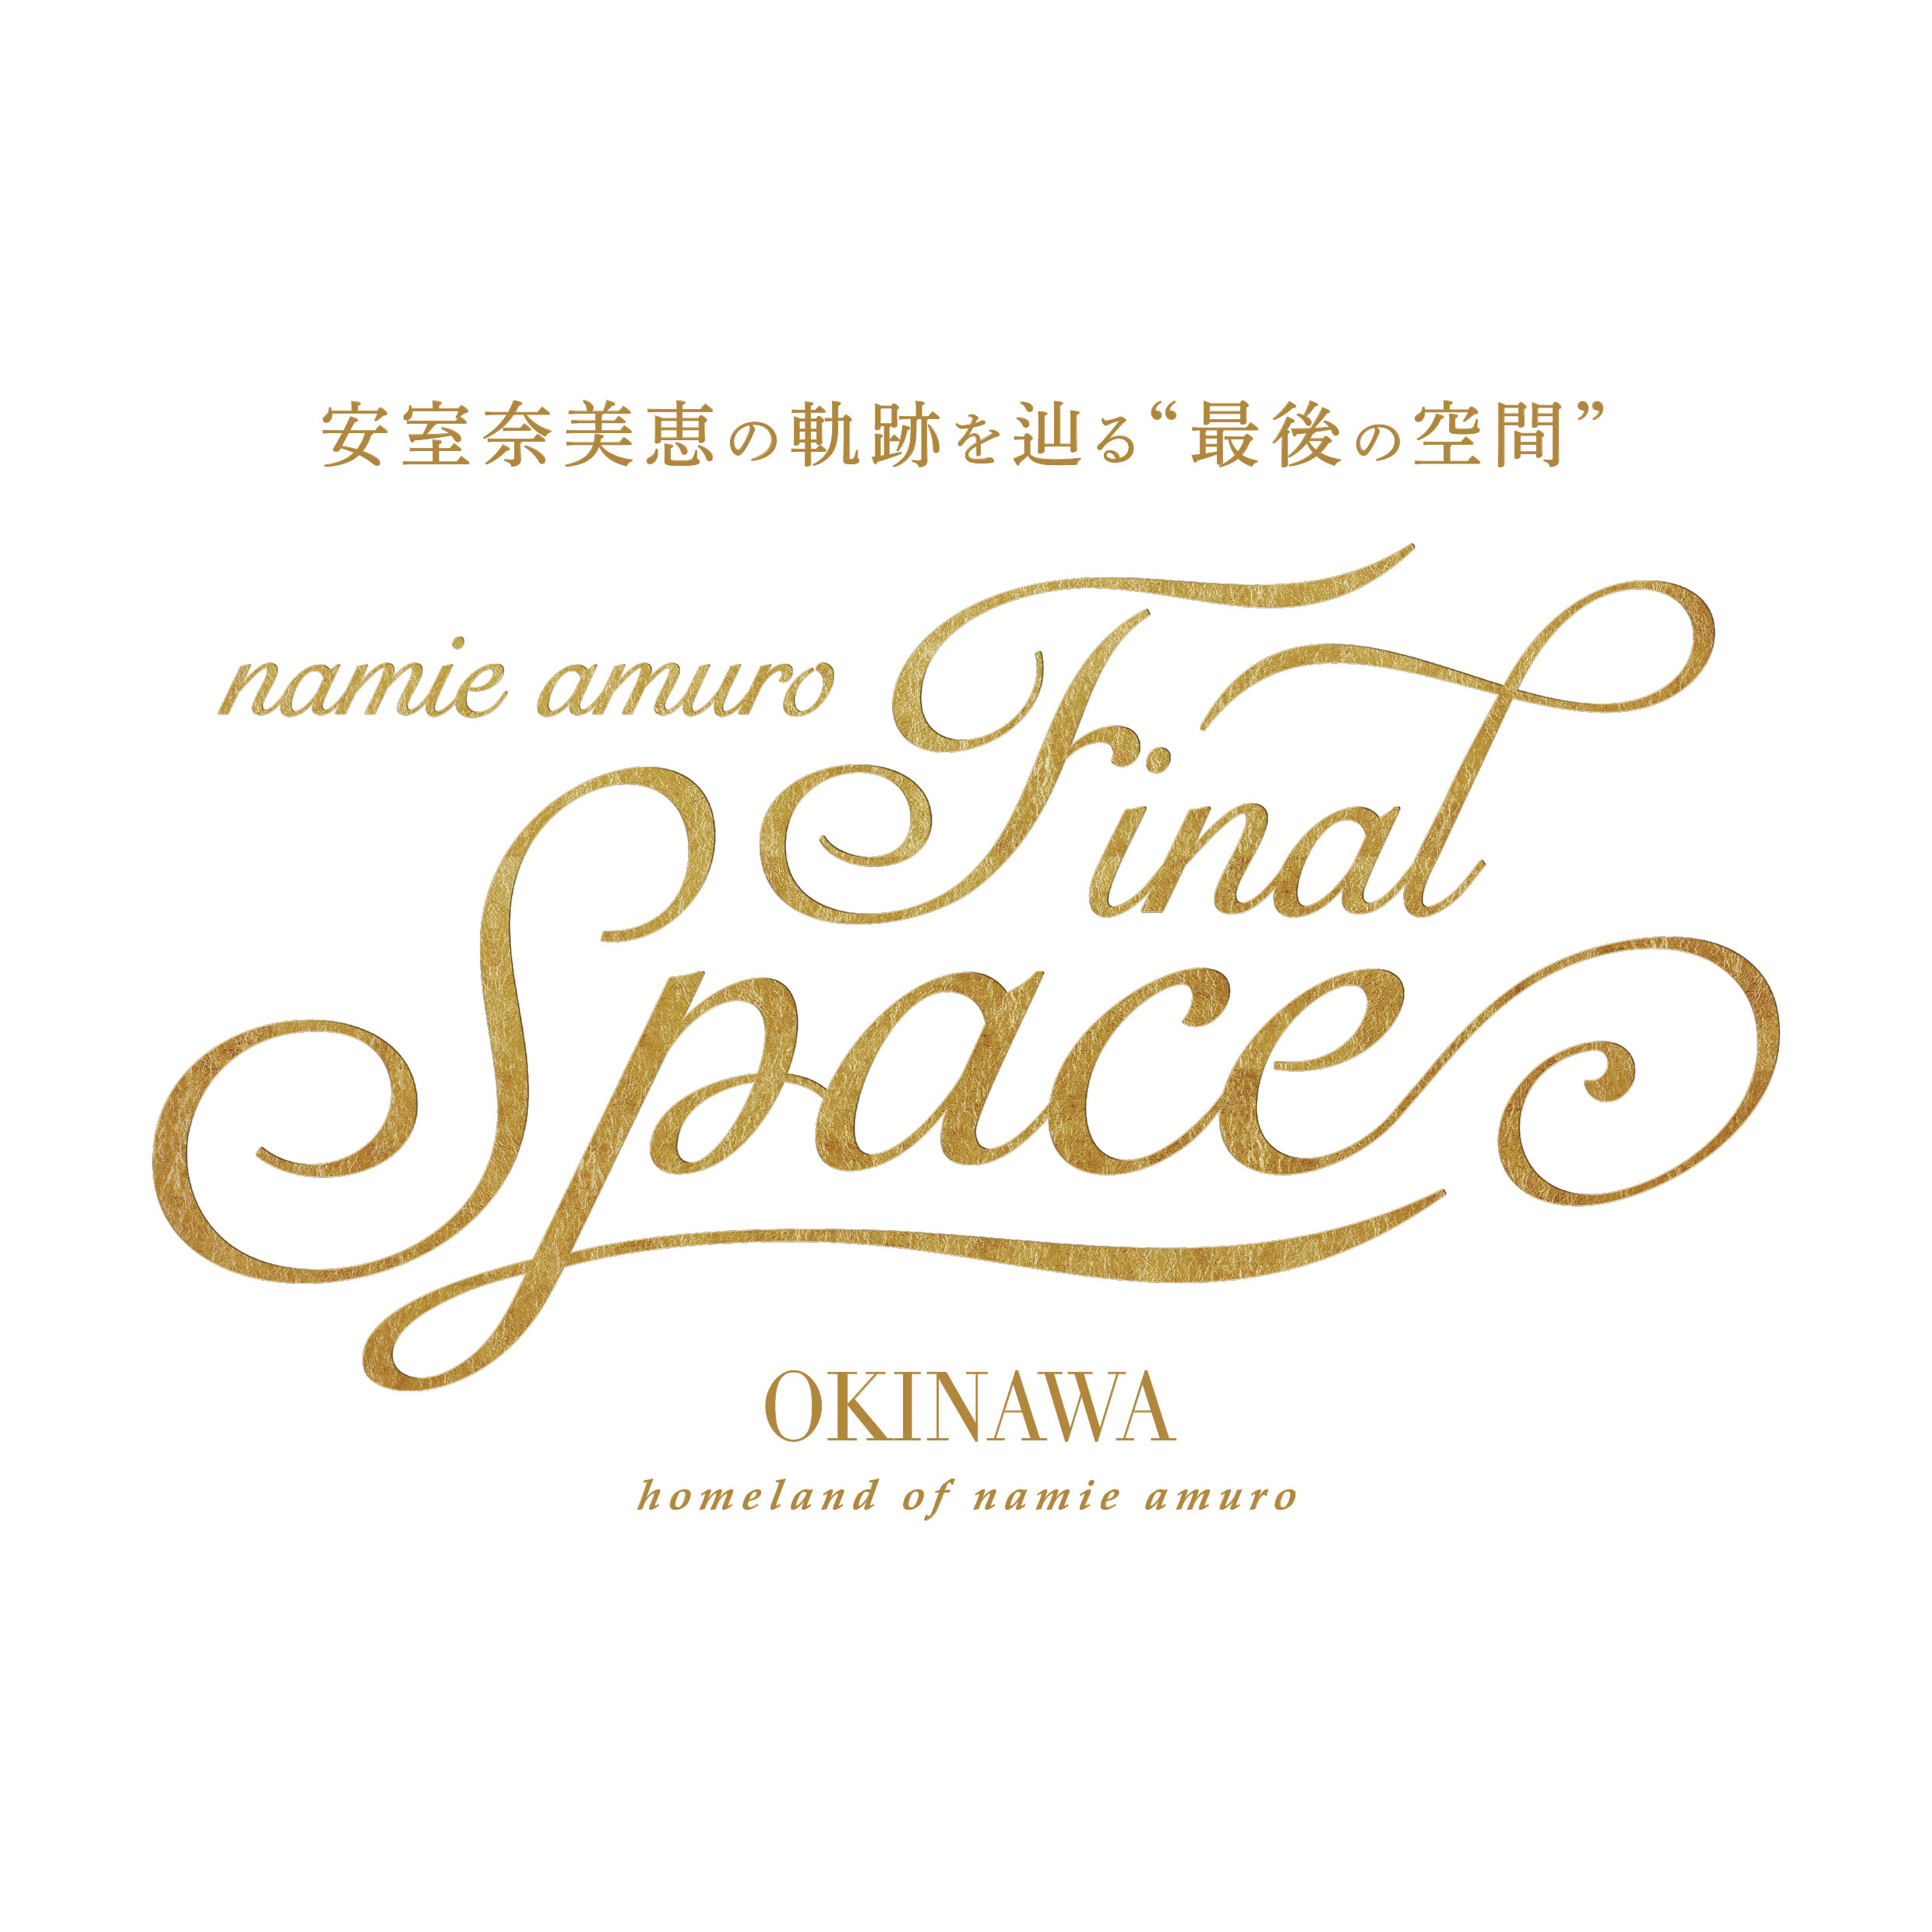 namie amuro Final Space | PLAZA HOUSE SHOPPING CENTER